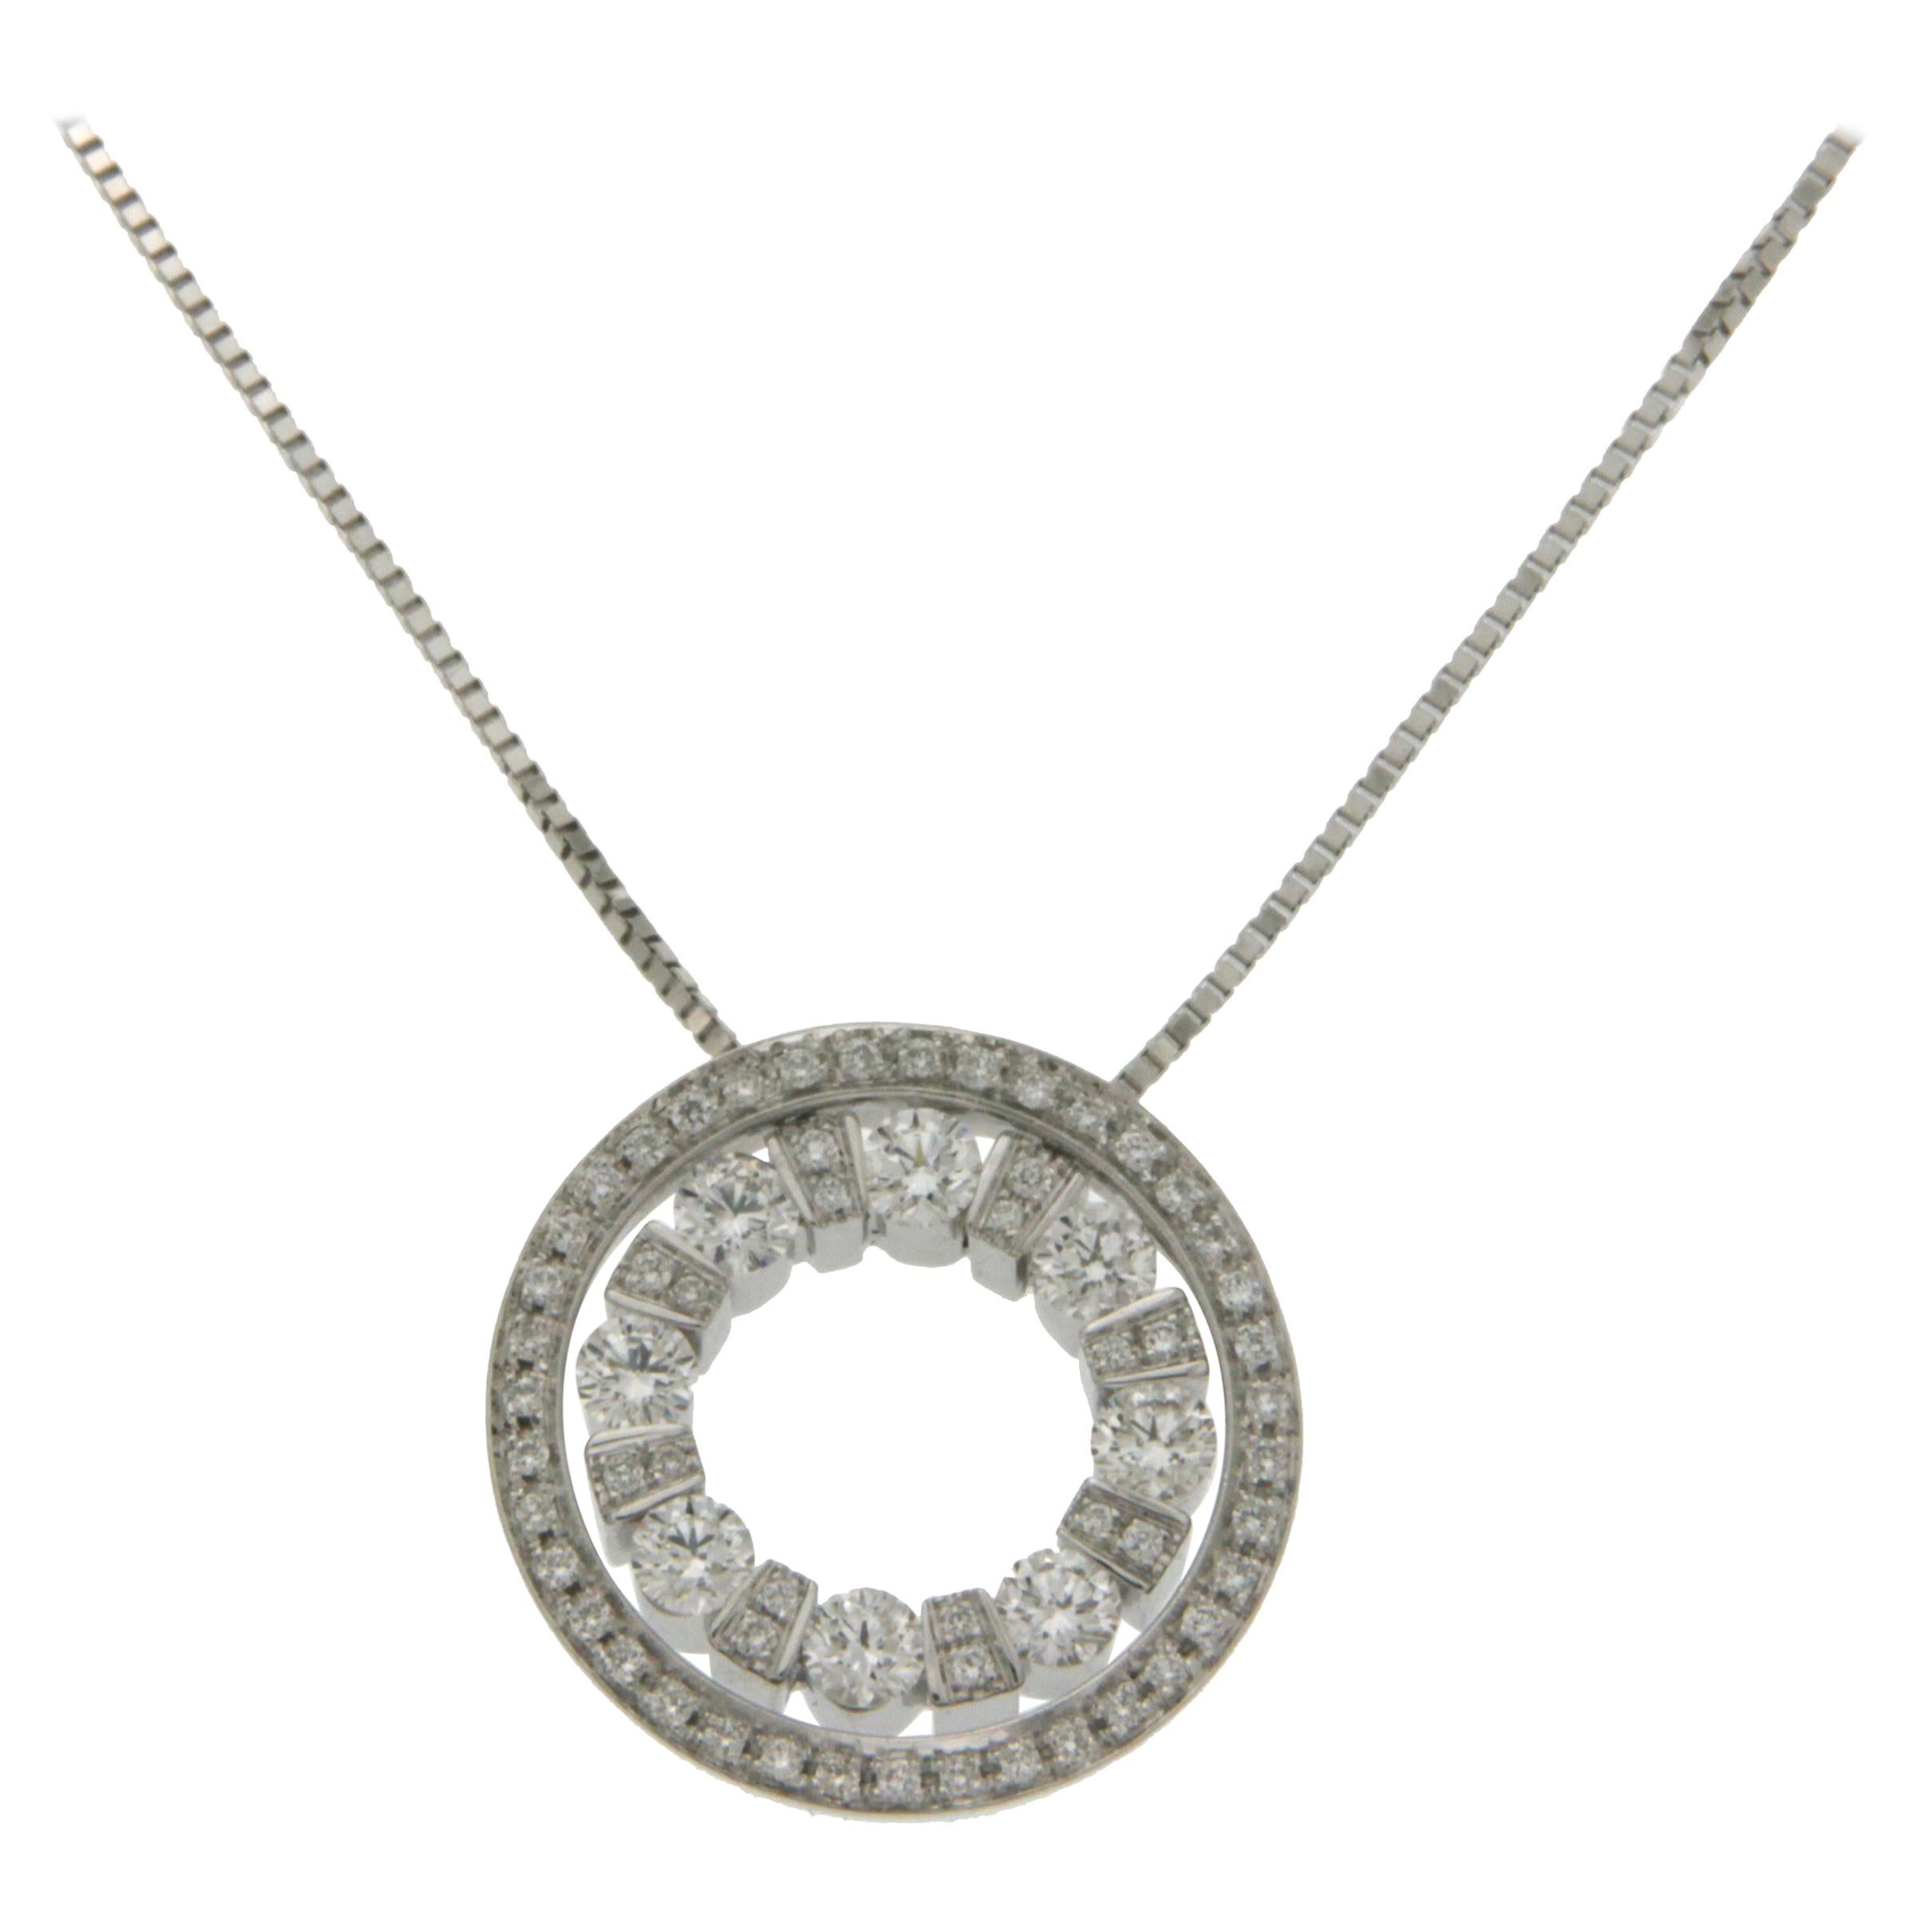 Damiani's Belle Époque 18 Karat Gold Round Diamond Pendant Necklace